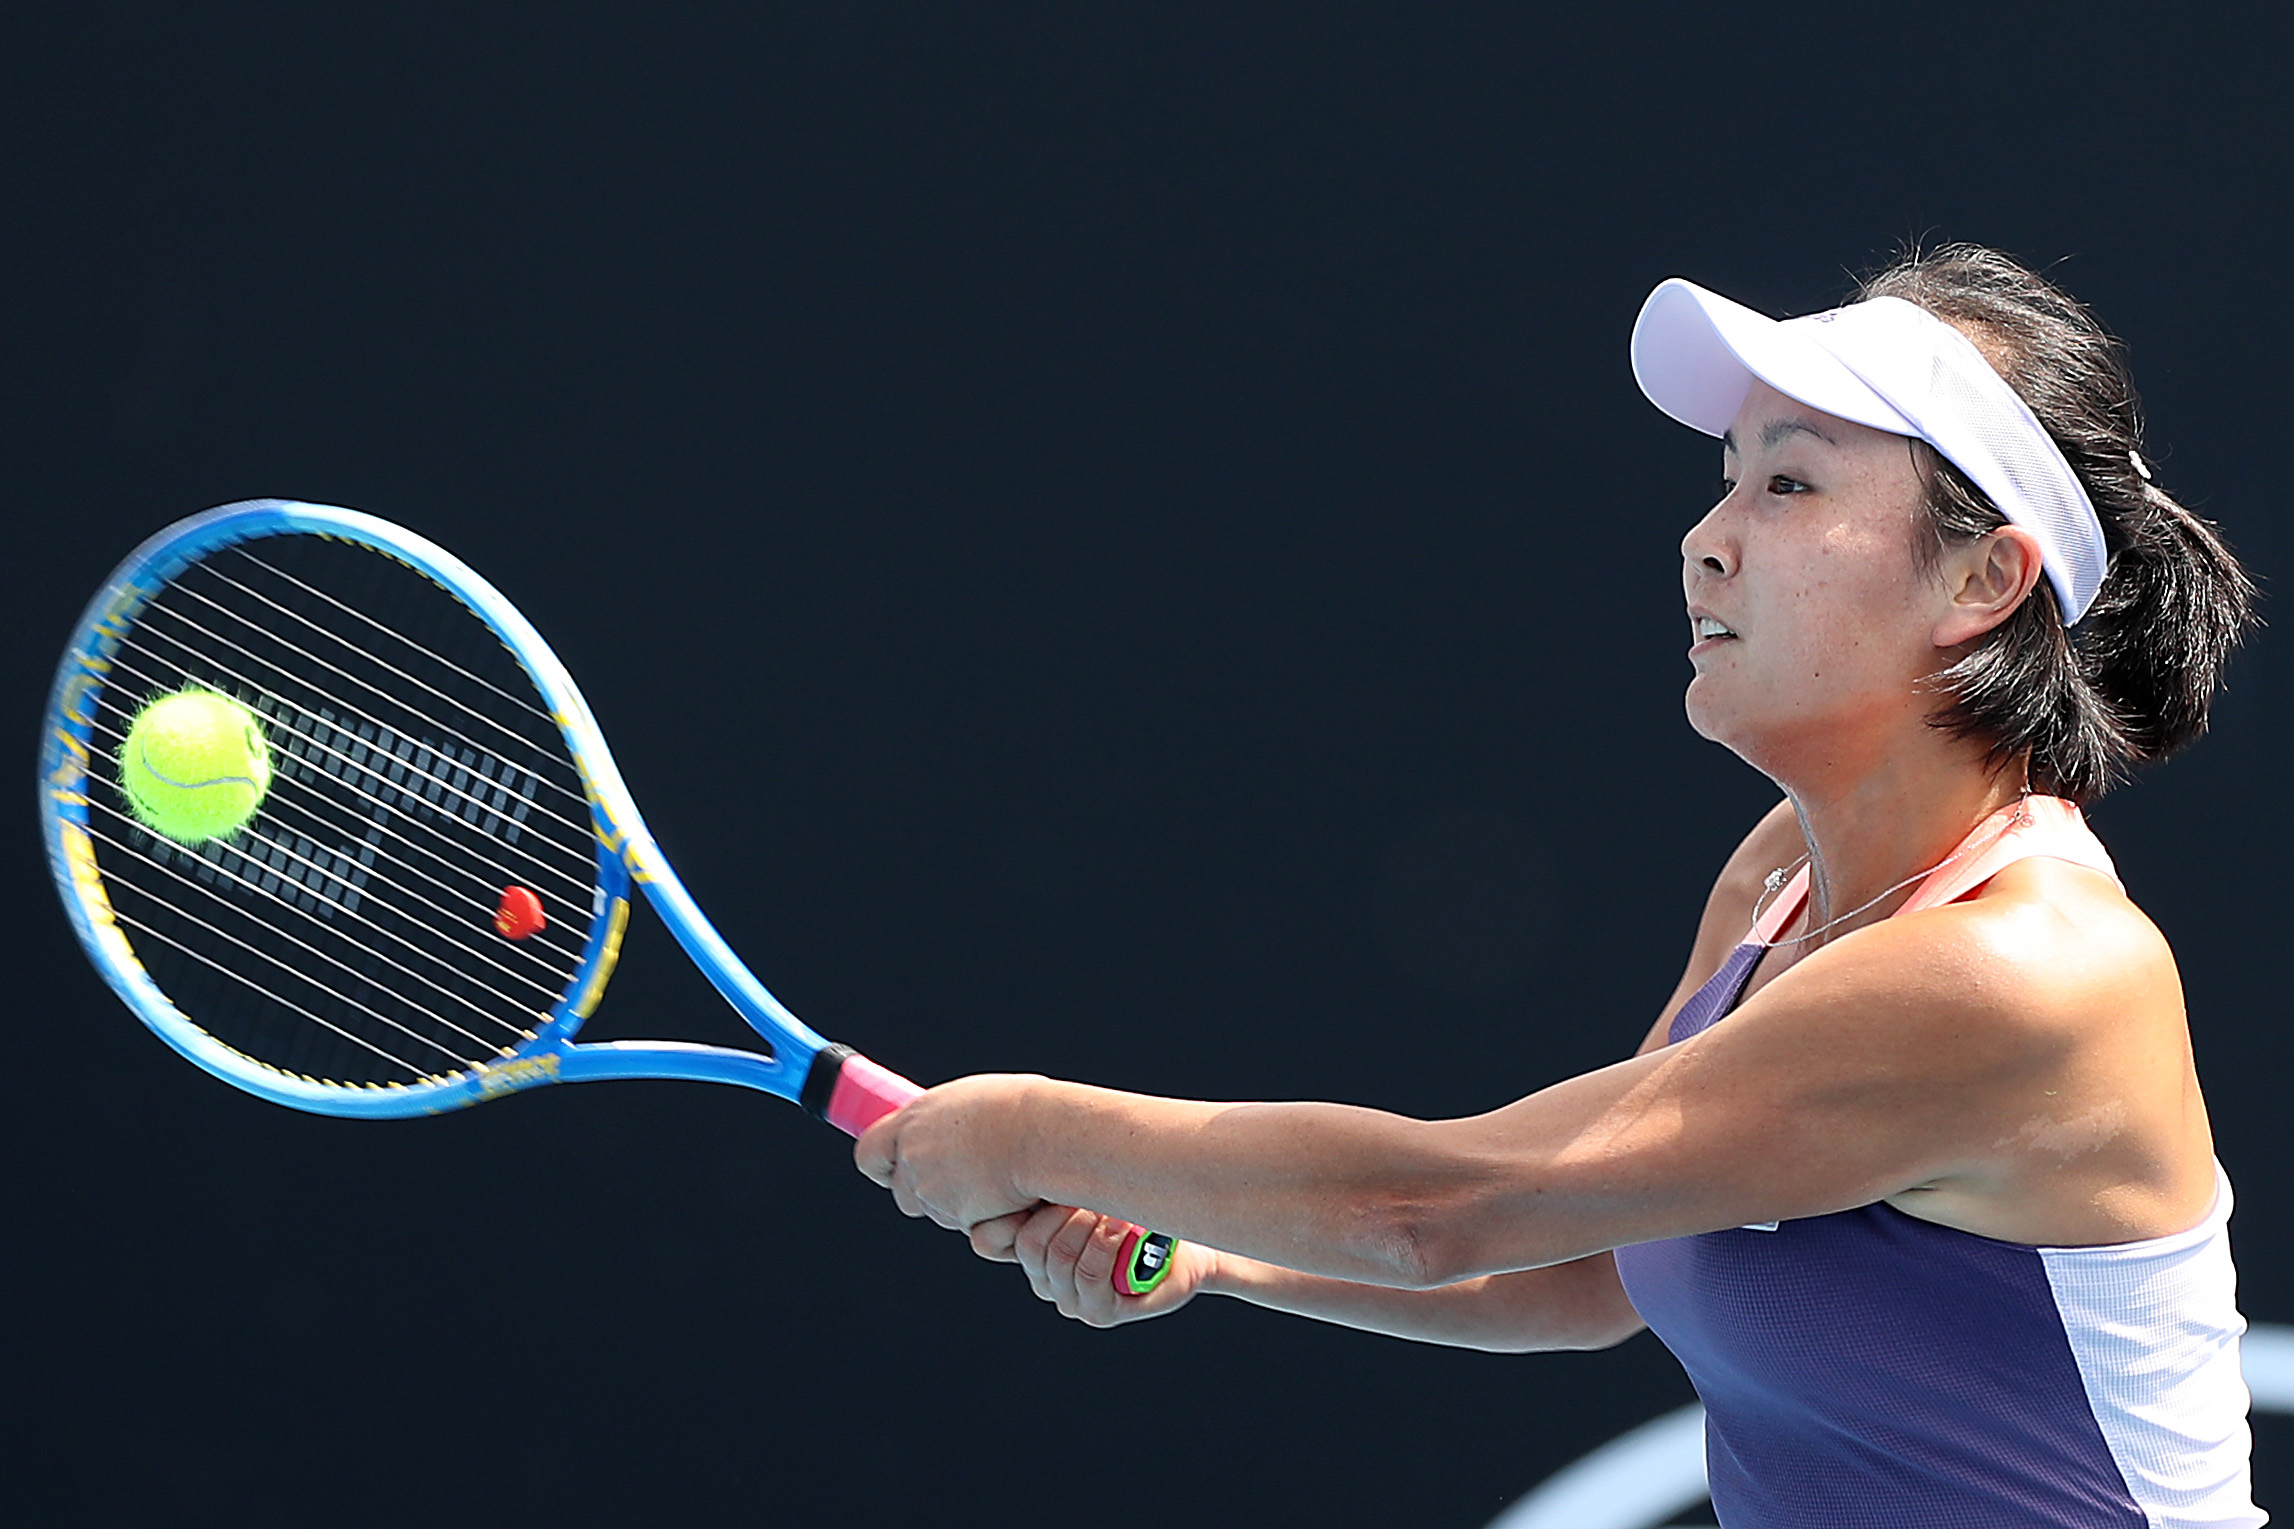 Peng Shuai hits a shot at the 2020 Australian Open.